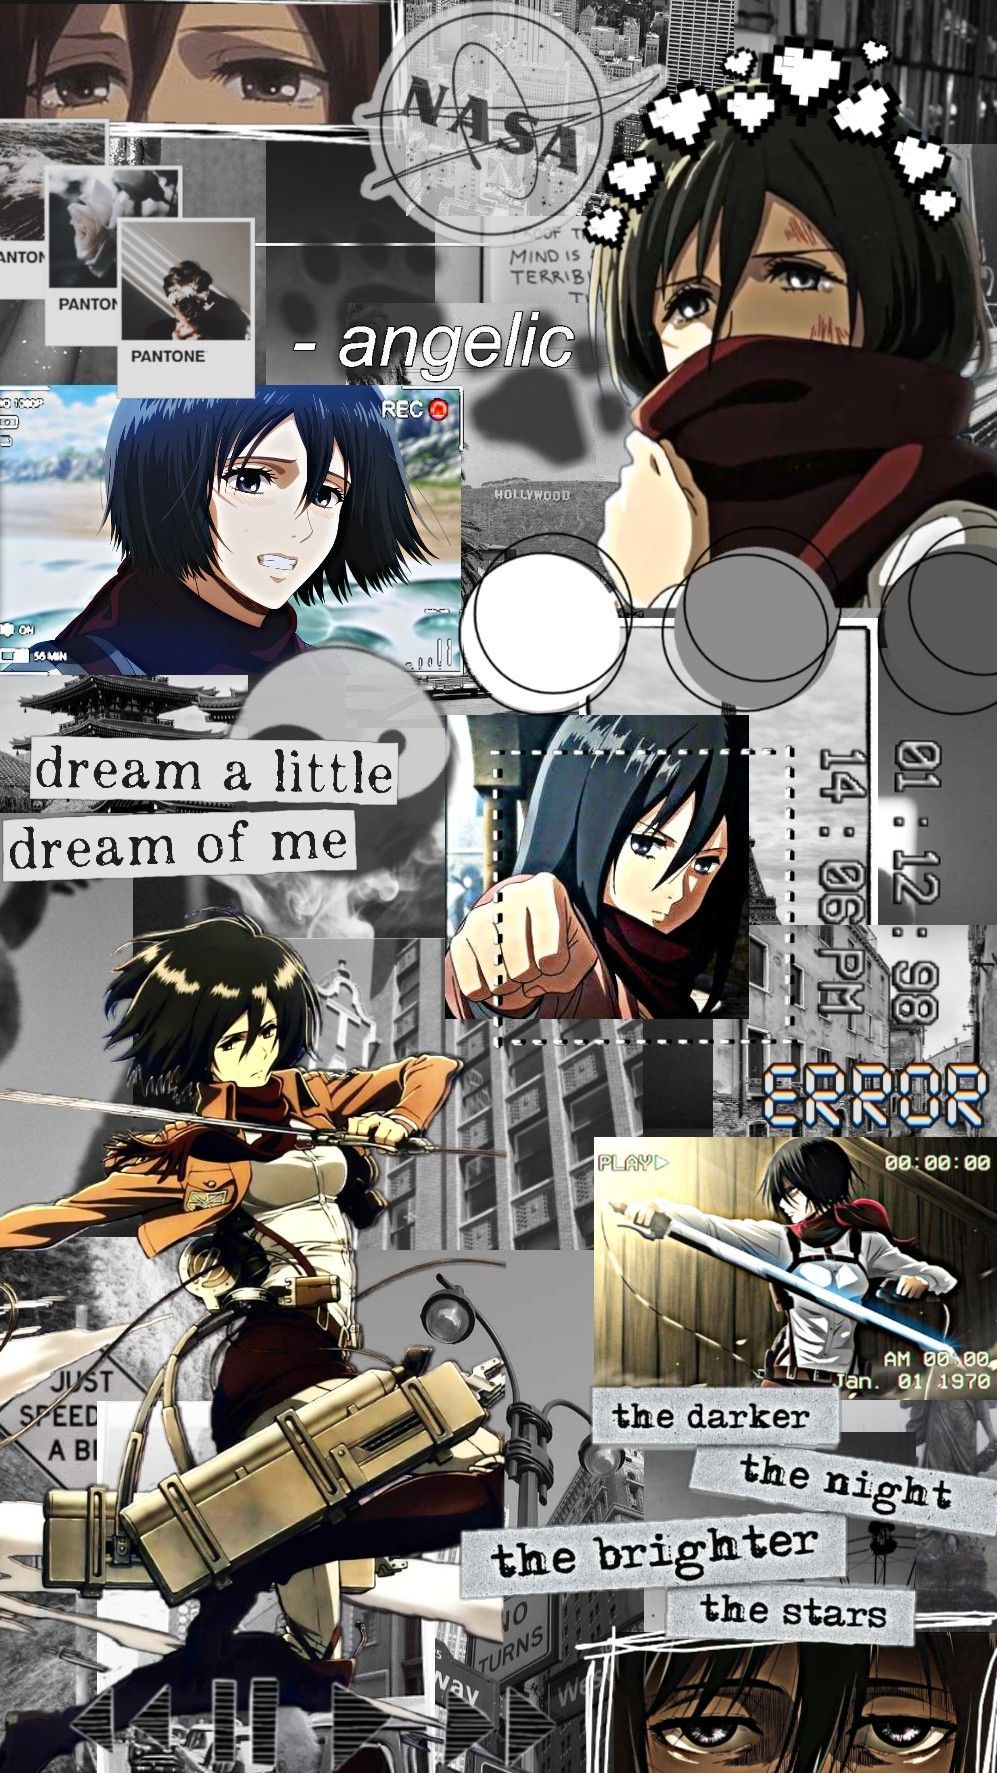 Mikasa Ackerman aesthetic wallpaper. Anime films, Cute anime wallpaper, Cartoon girl image